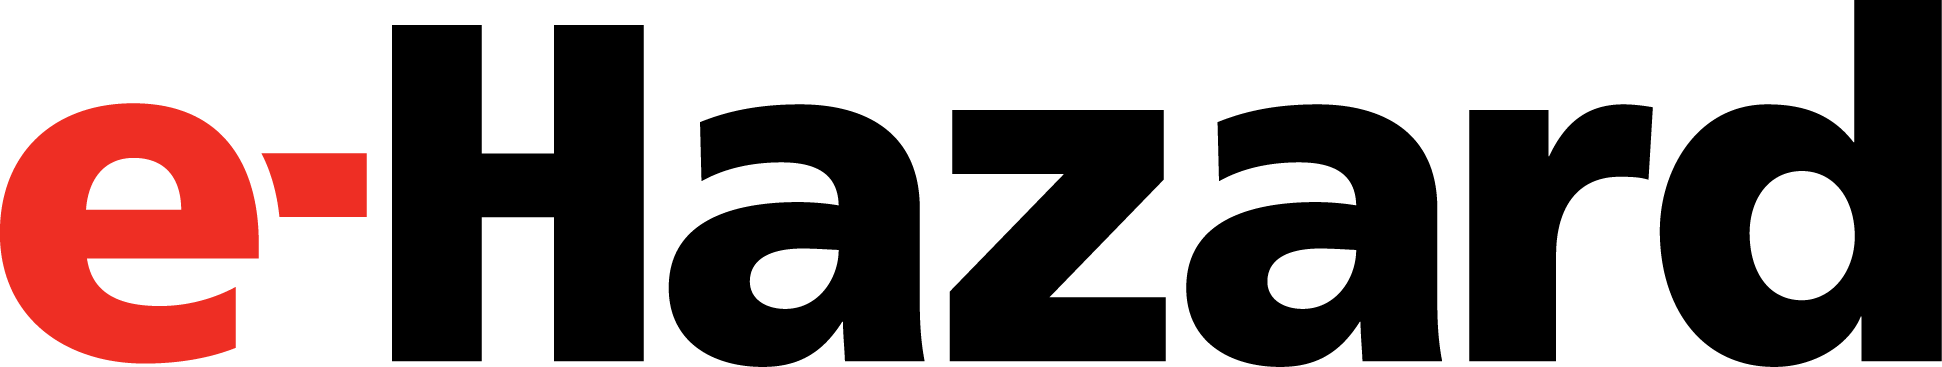 Hazard Logo - Brand Central For E Hazard, Marketing Materials, And More